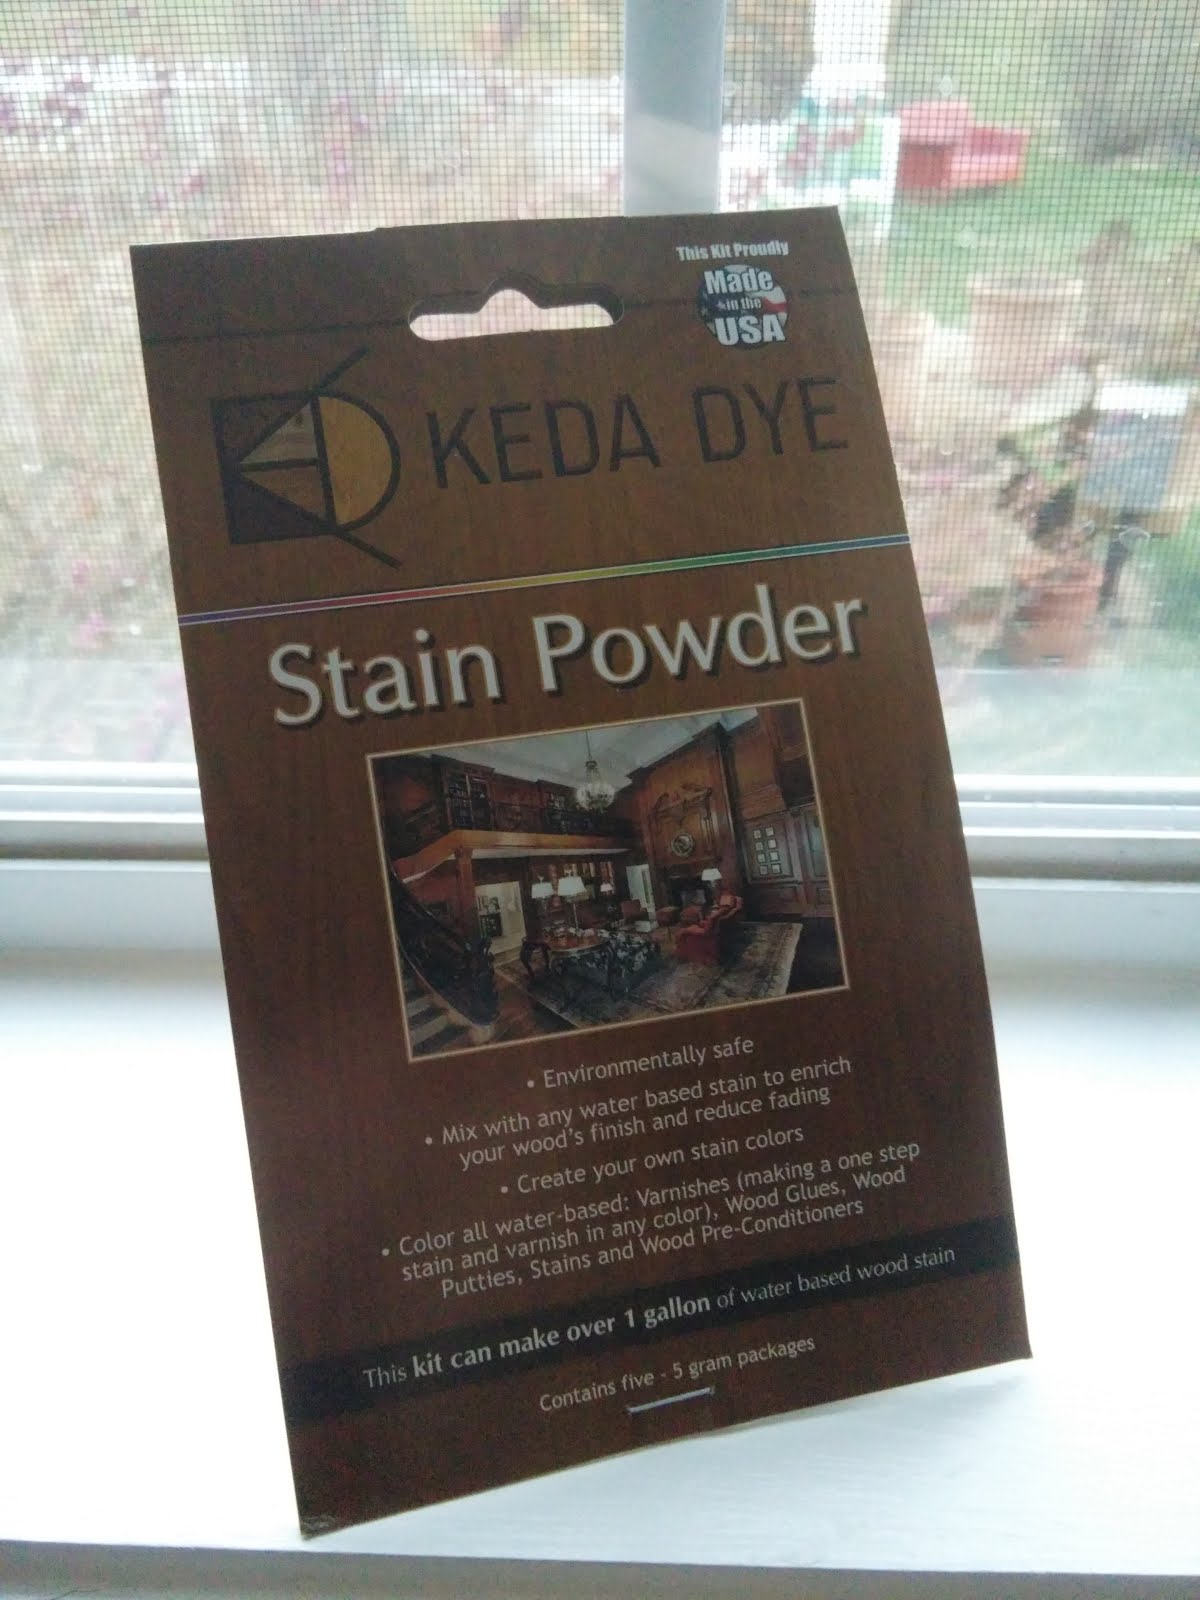 Keda Wood Dye Five Wood Dye Colors Kit Makes Vibrant Wood Stain to